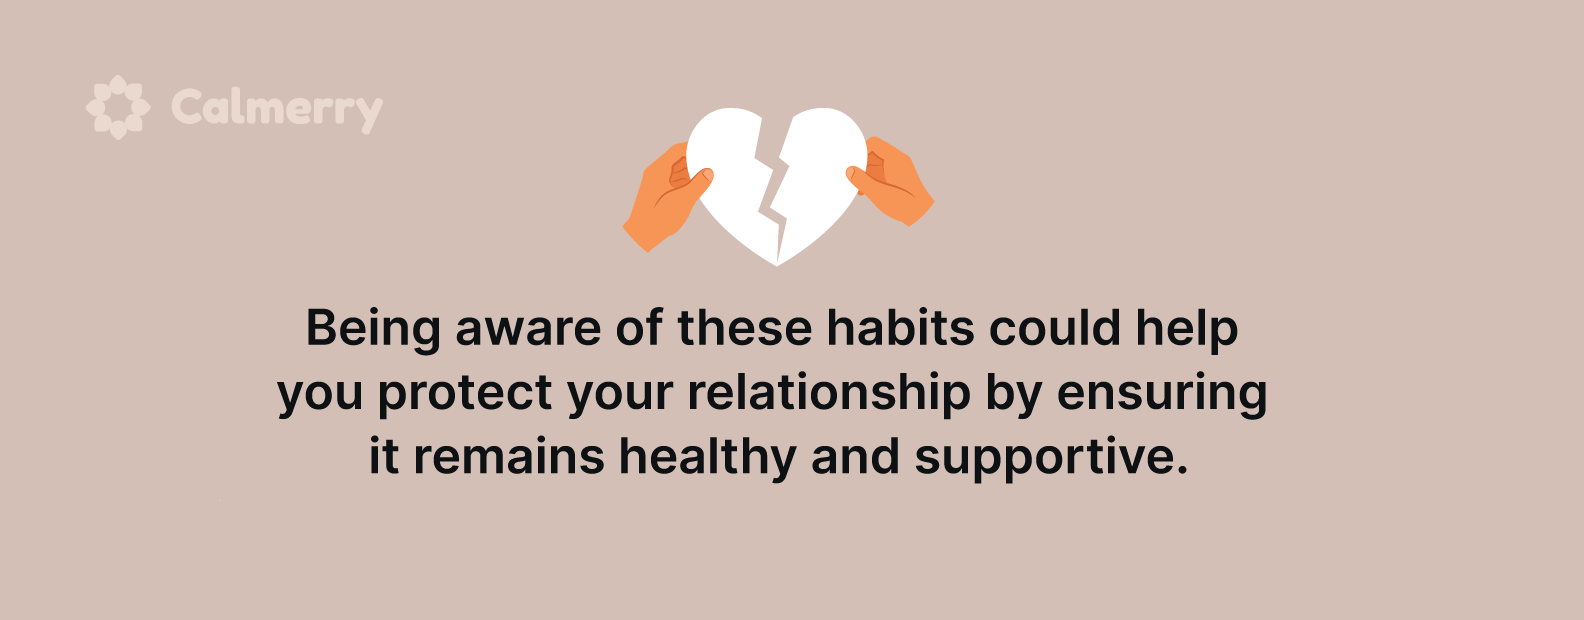 unhealthy relationship habits